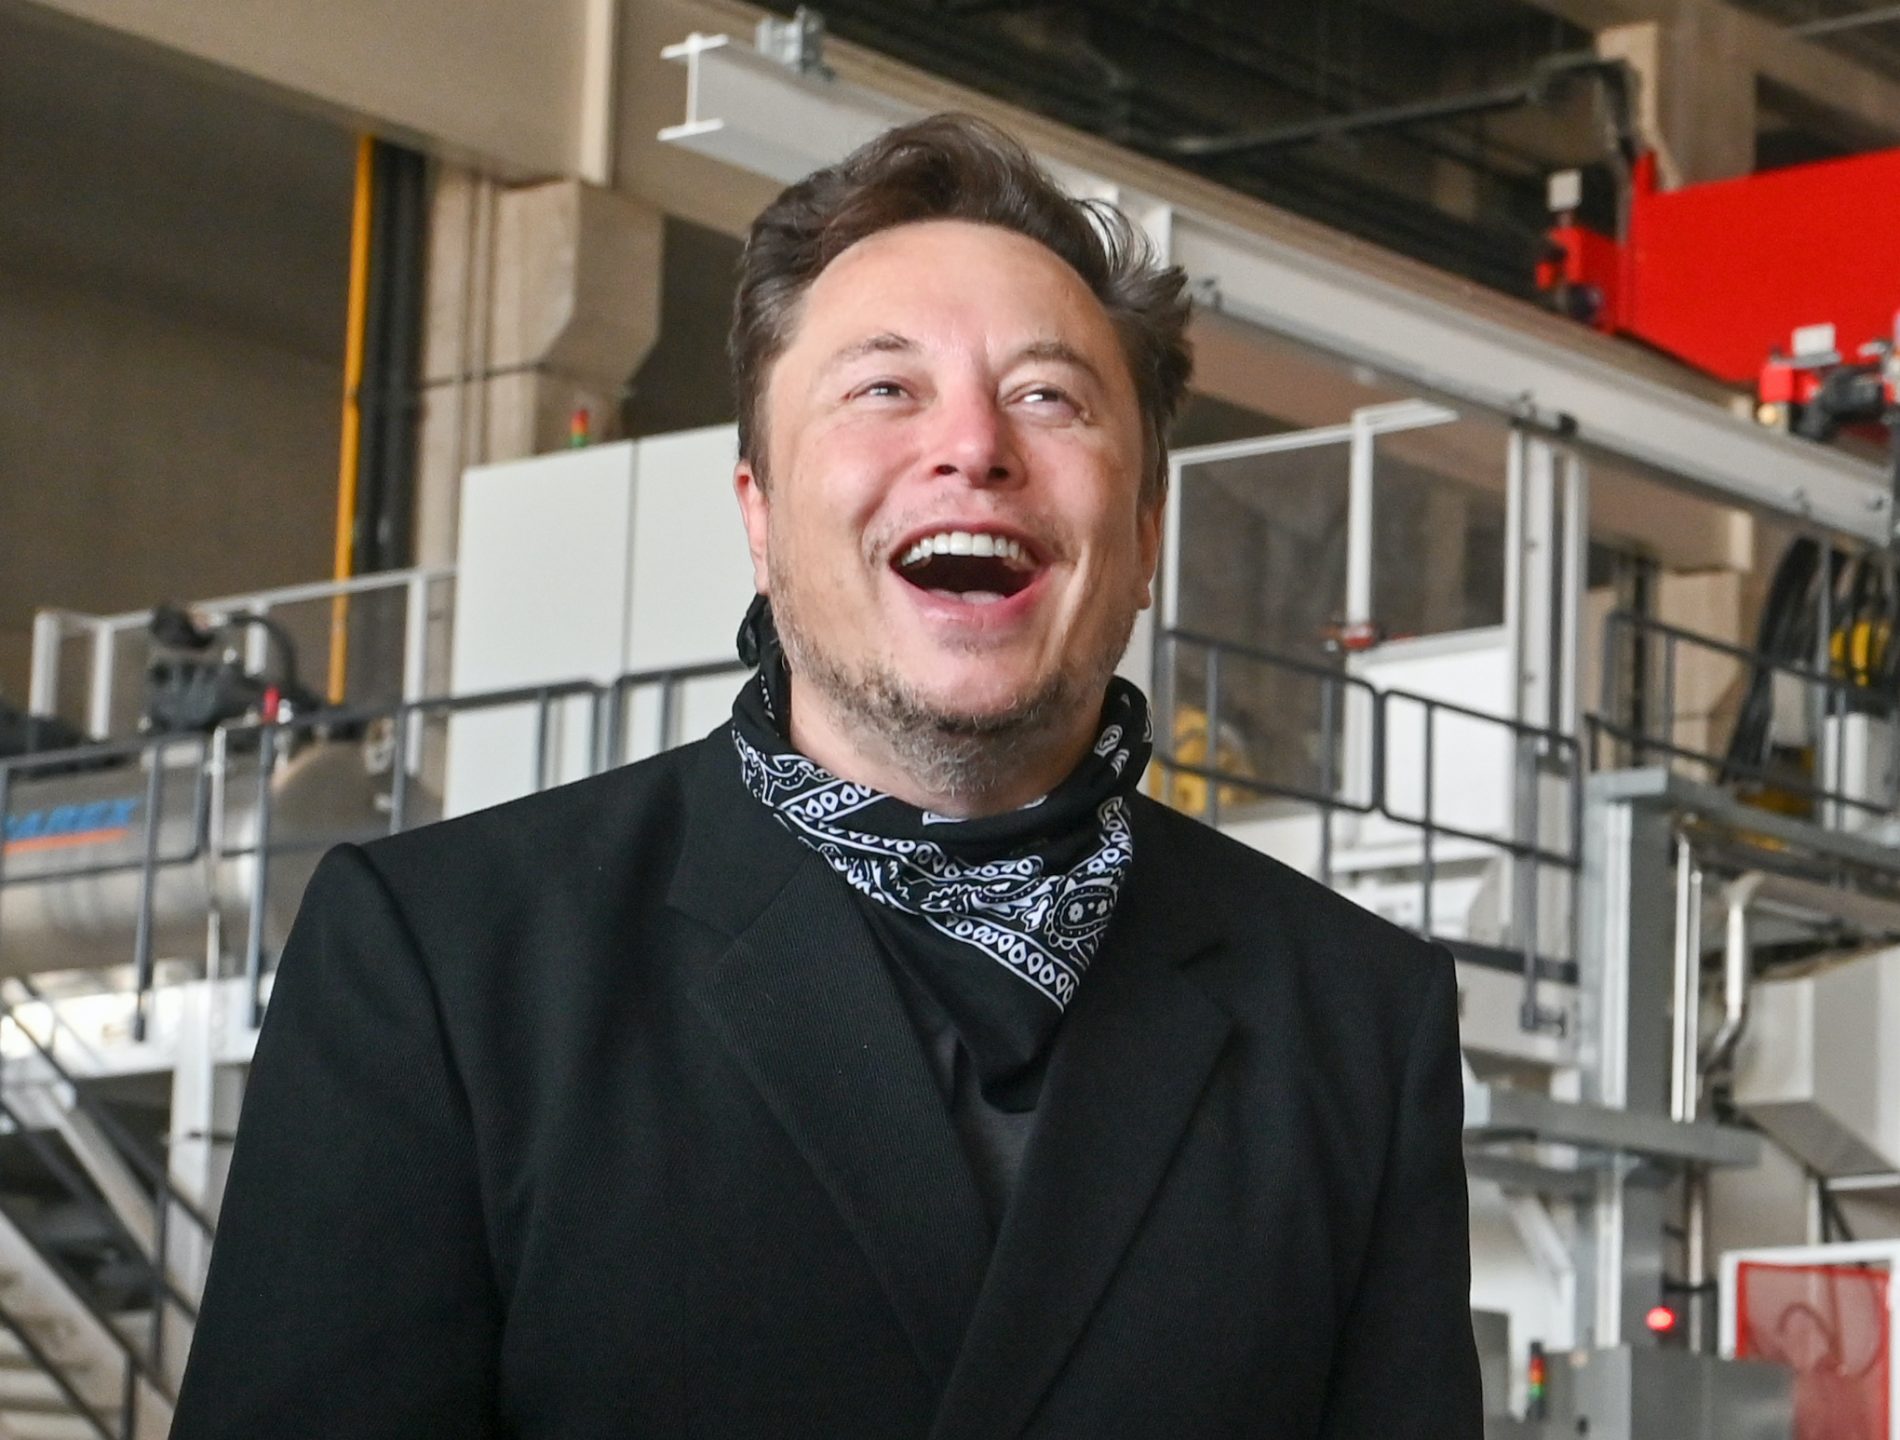 Elon Musk azioni Tesla